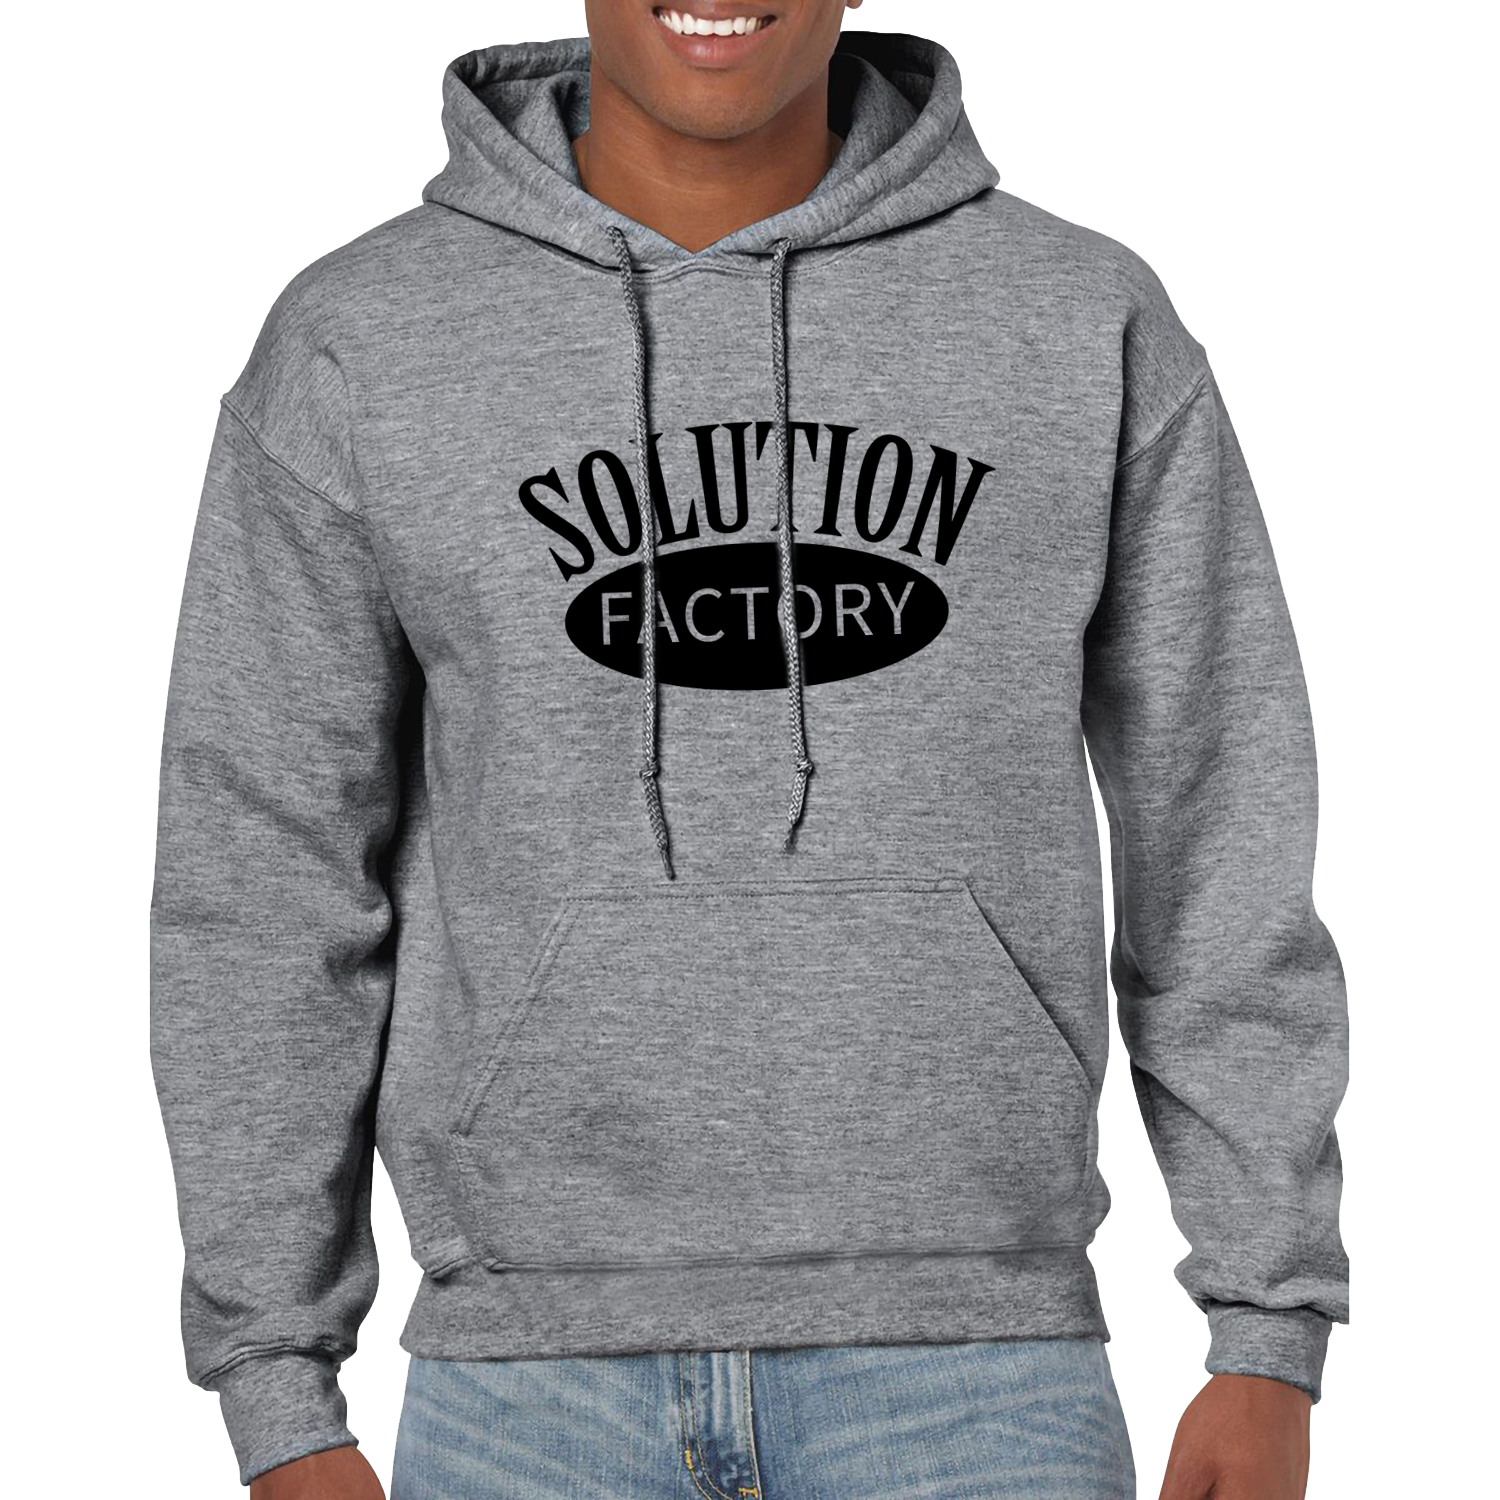 AI-HIPR-18500-gildanadultheavyblend-hoodedsweatshirt-APP#-solutionfactory-1color